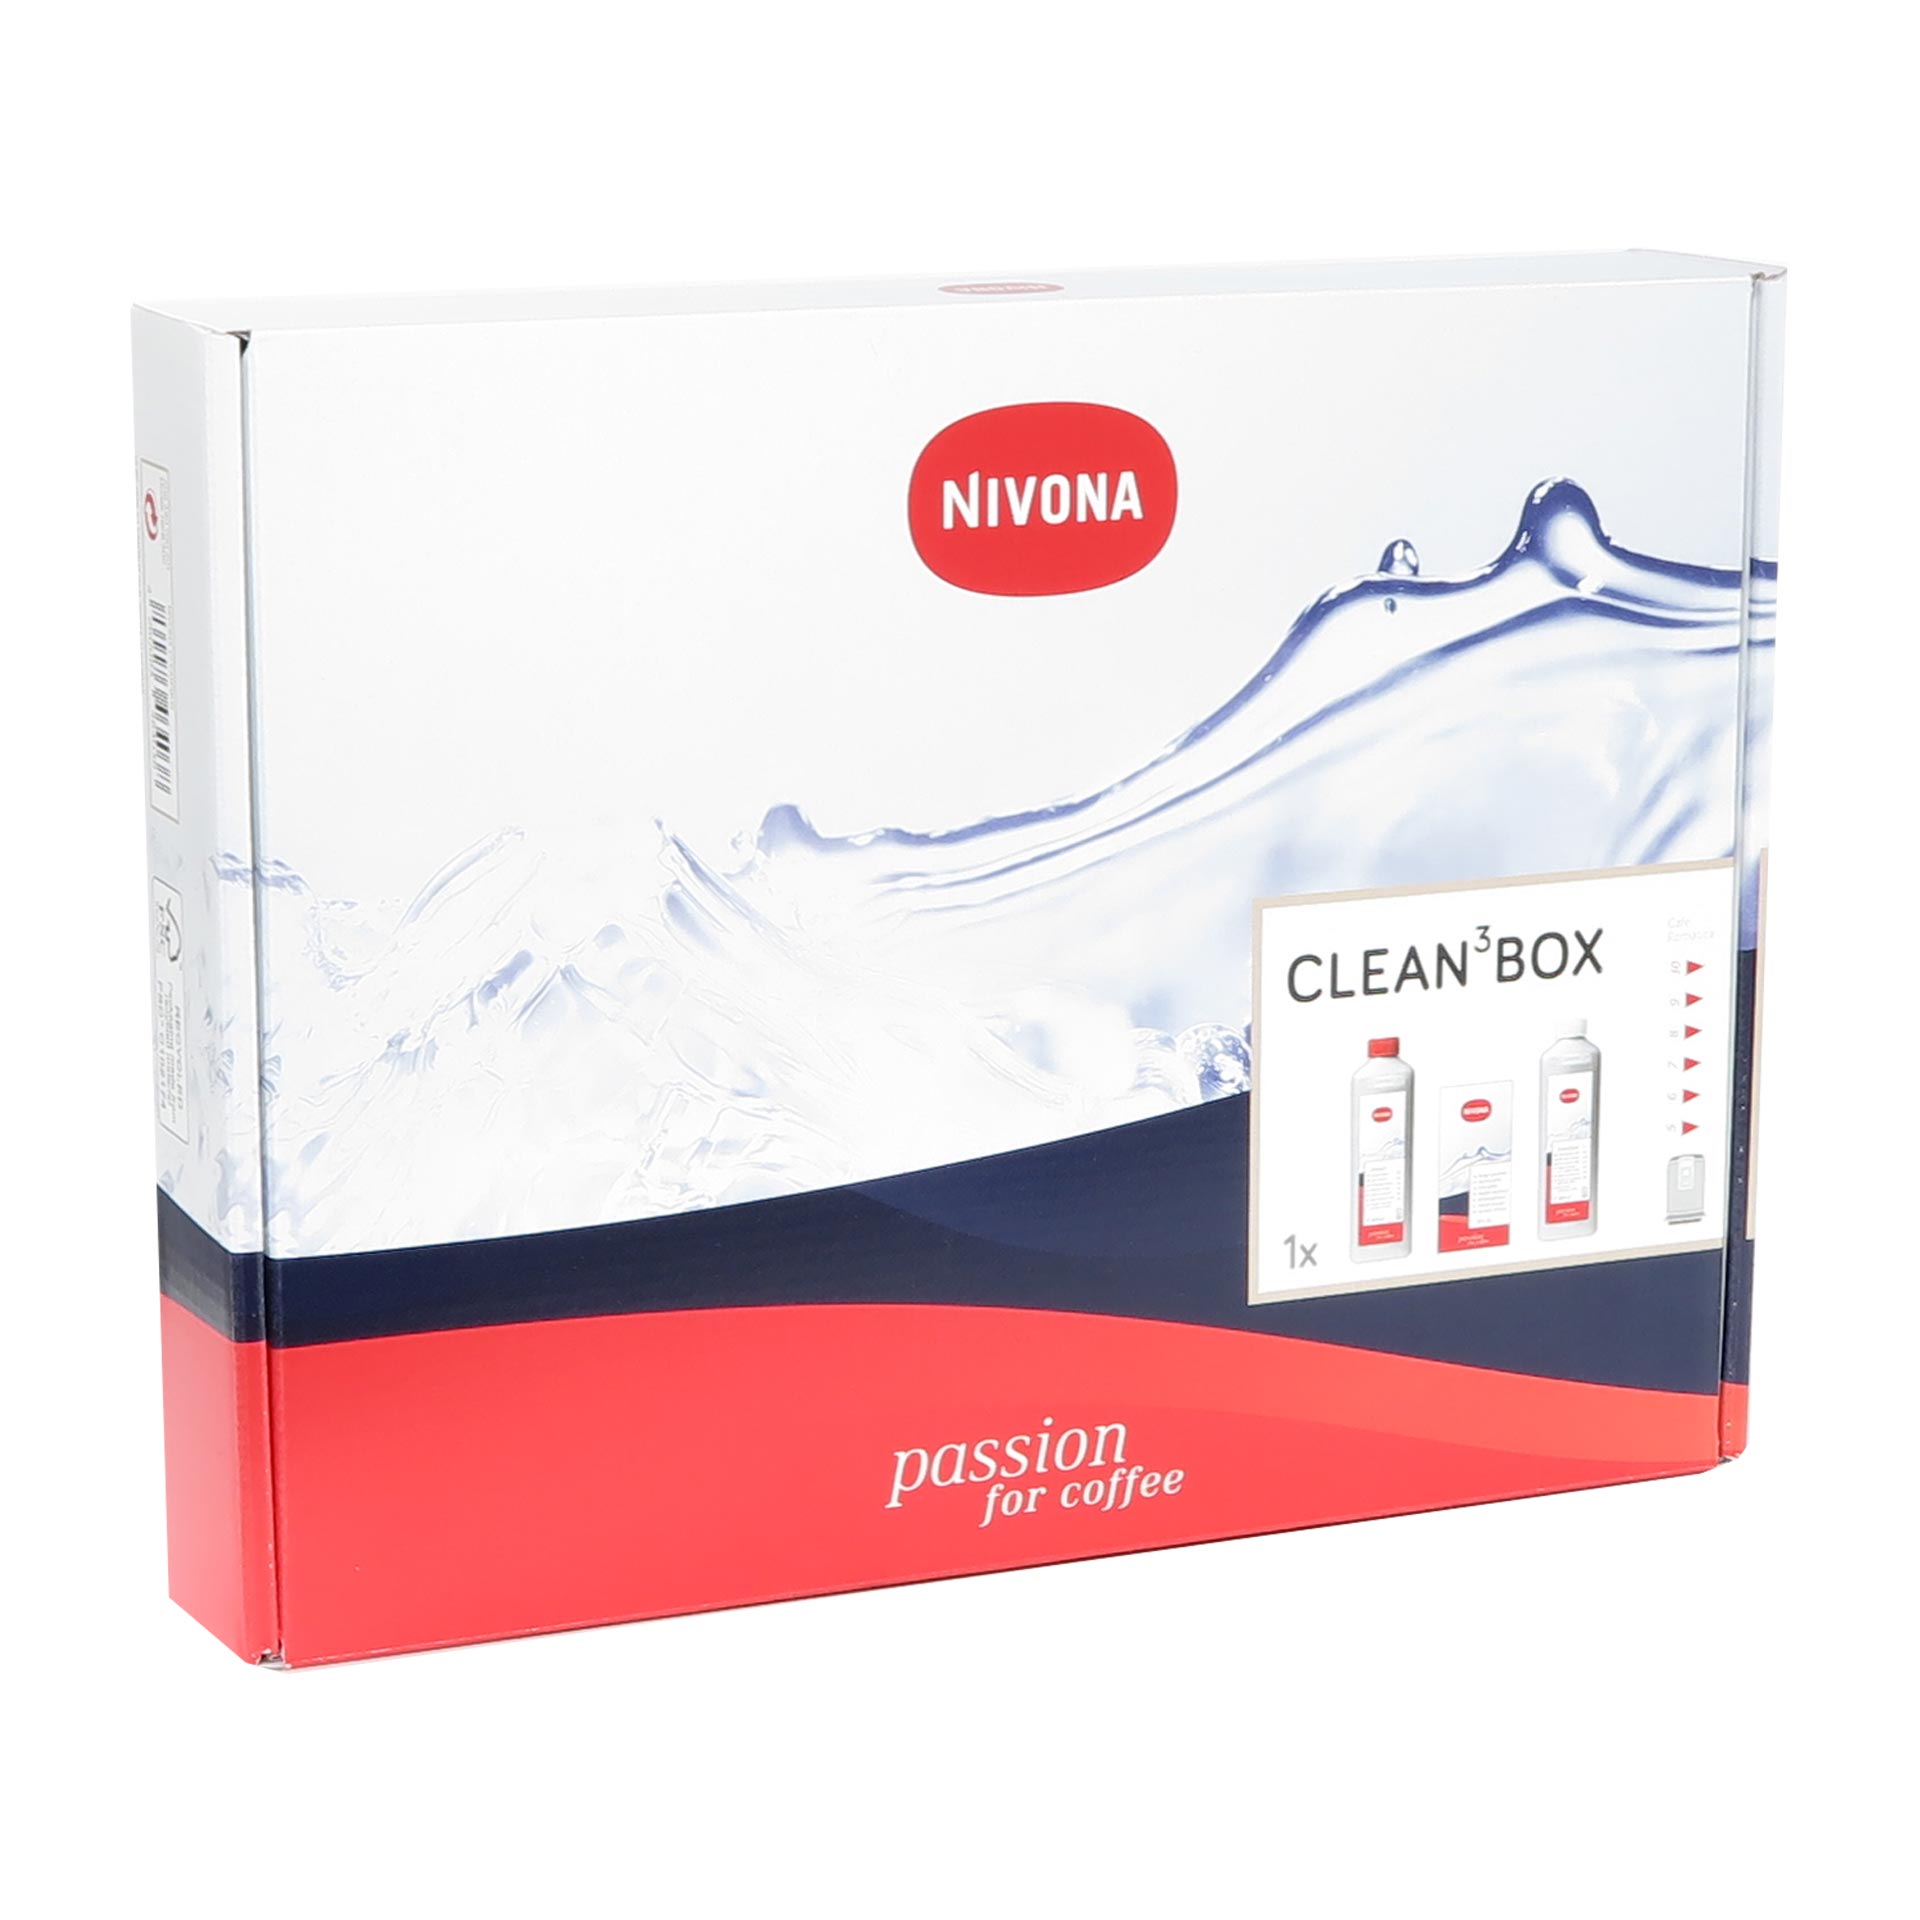 Nivona Clean³Box